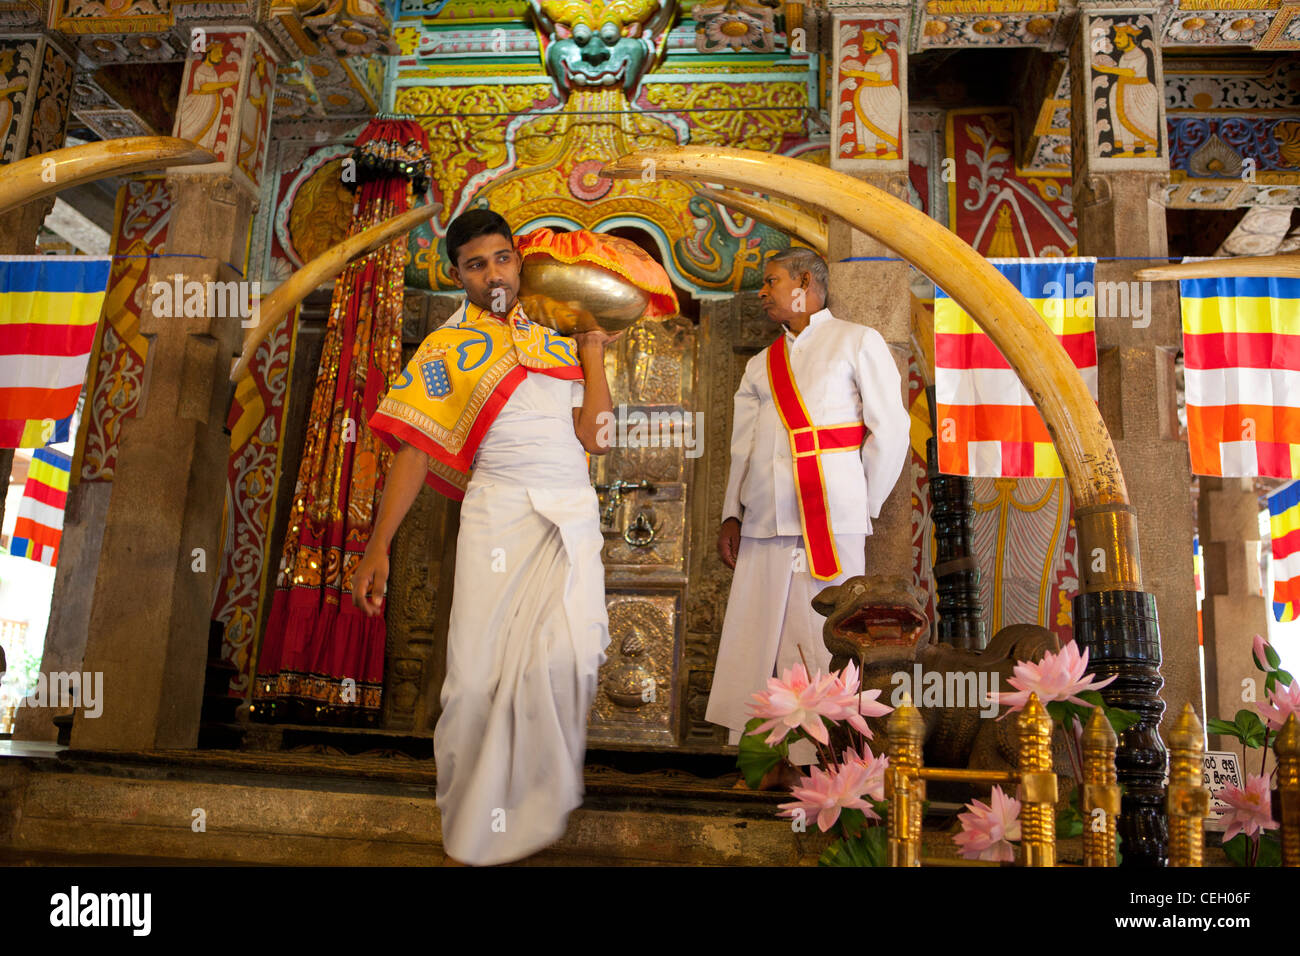 Persone dente santuario puja Tempio del Sacro Dente reliquia Kandy Sri Lanka asia Foto Stock